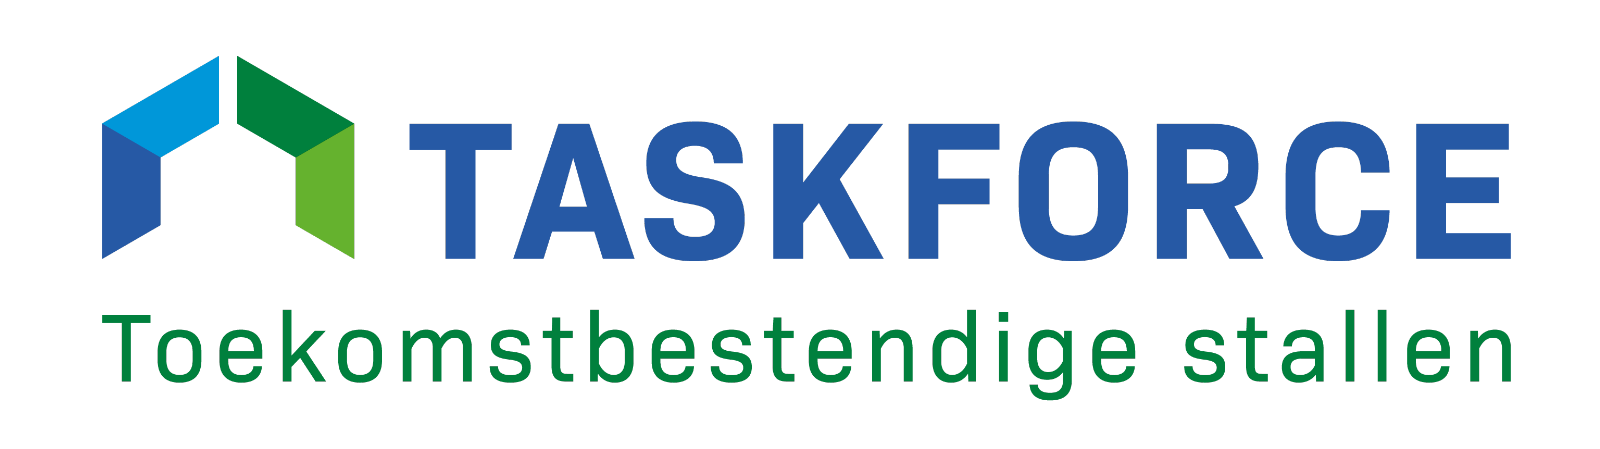 Taskforce Toekomstbestendige Stallen logo